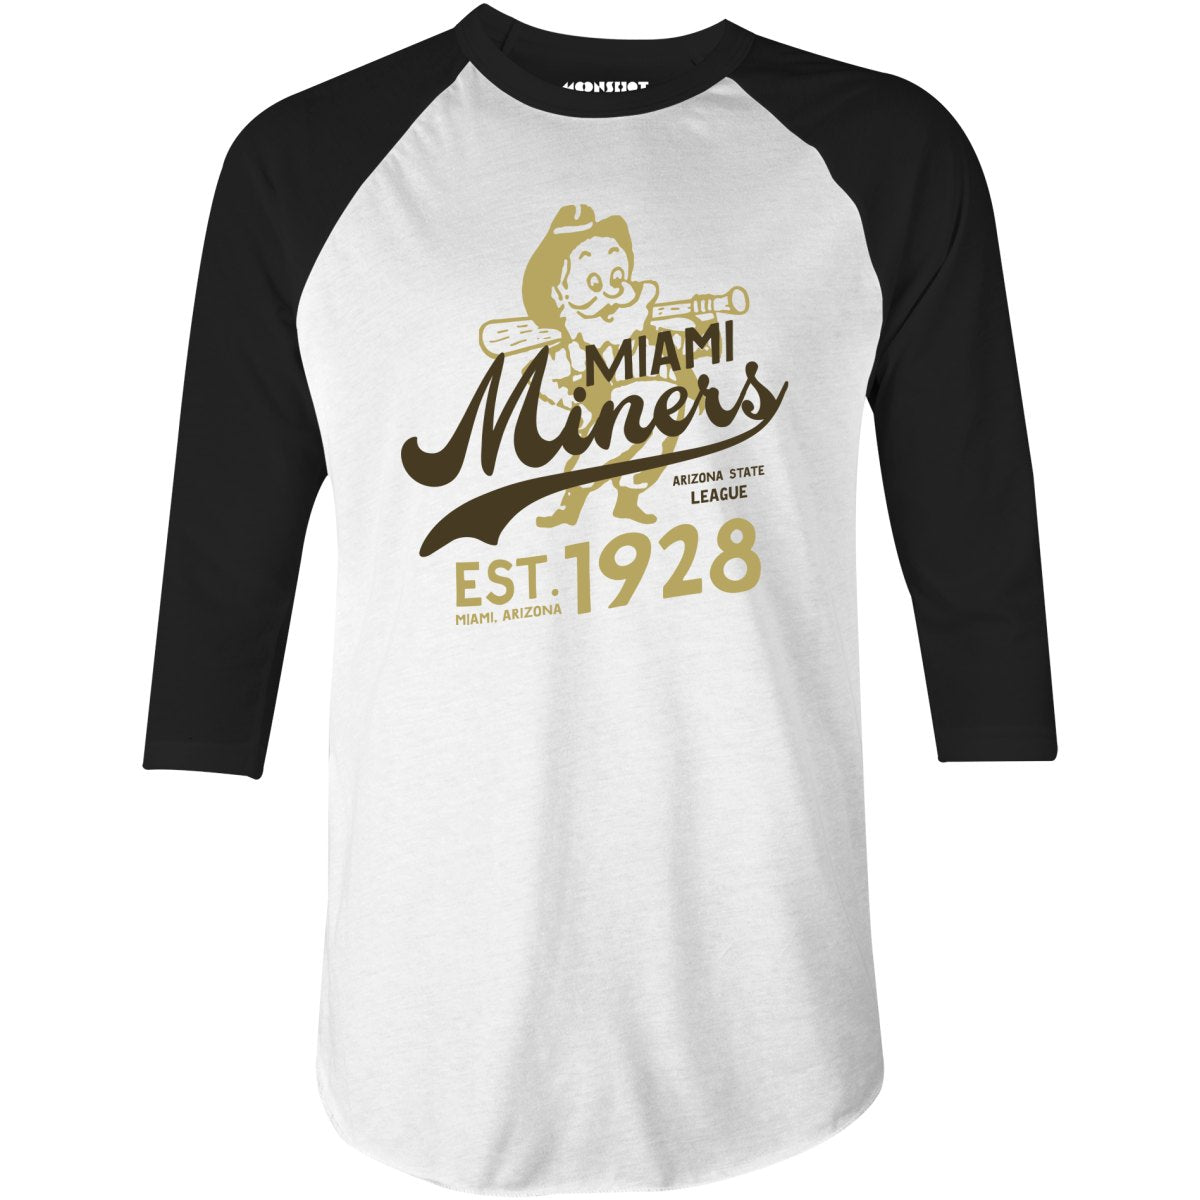 Miami Miners - Arizona - Vintage Defunct Baseball Teams - 3/4 Sleeve Raglan T-Shirt